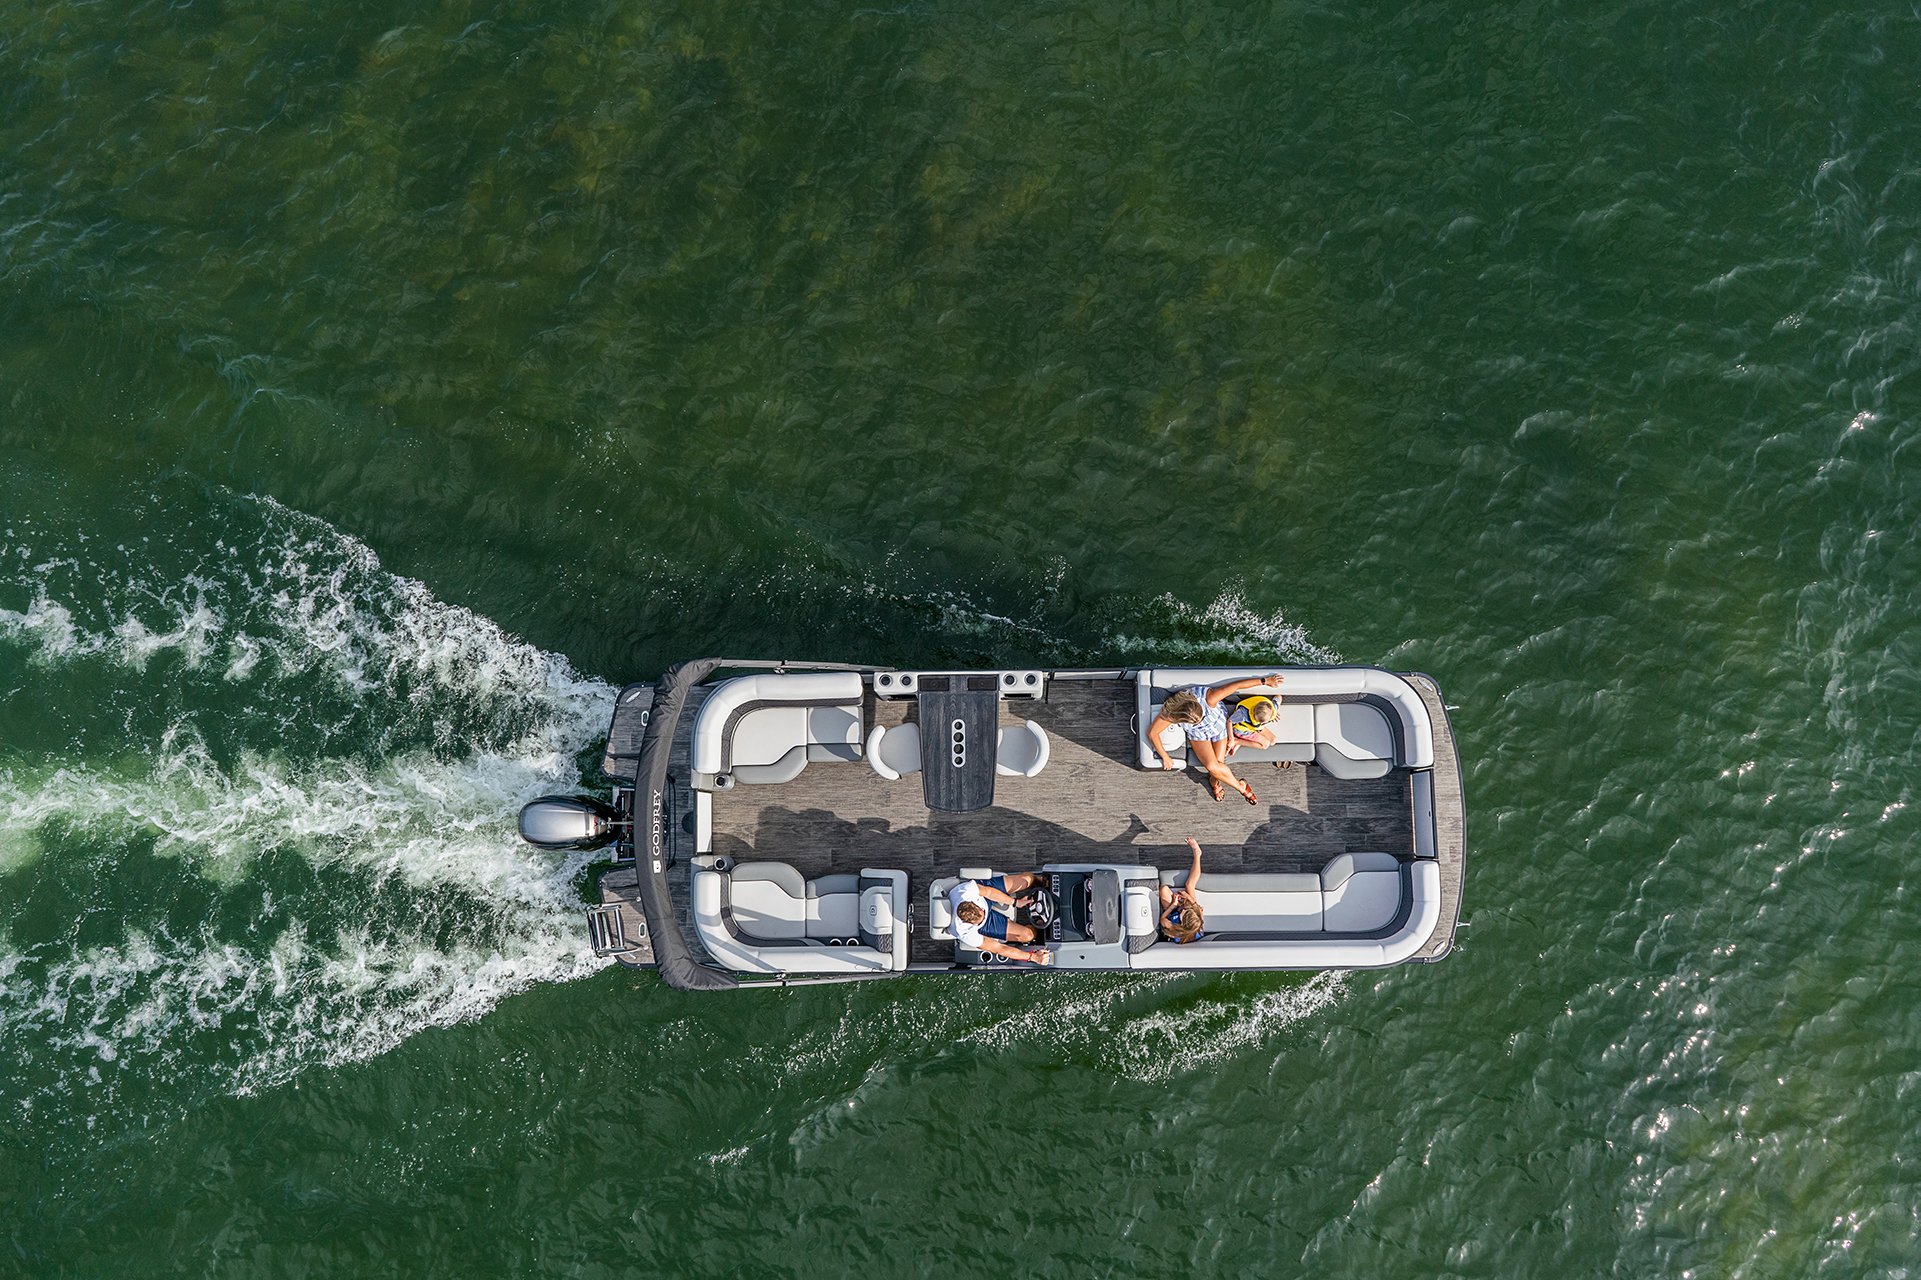 28 Luxury Pontoon Boat Seats